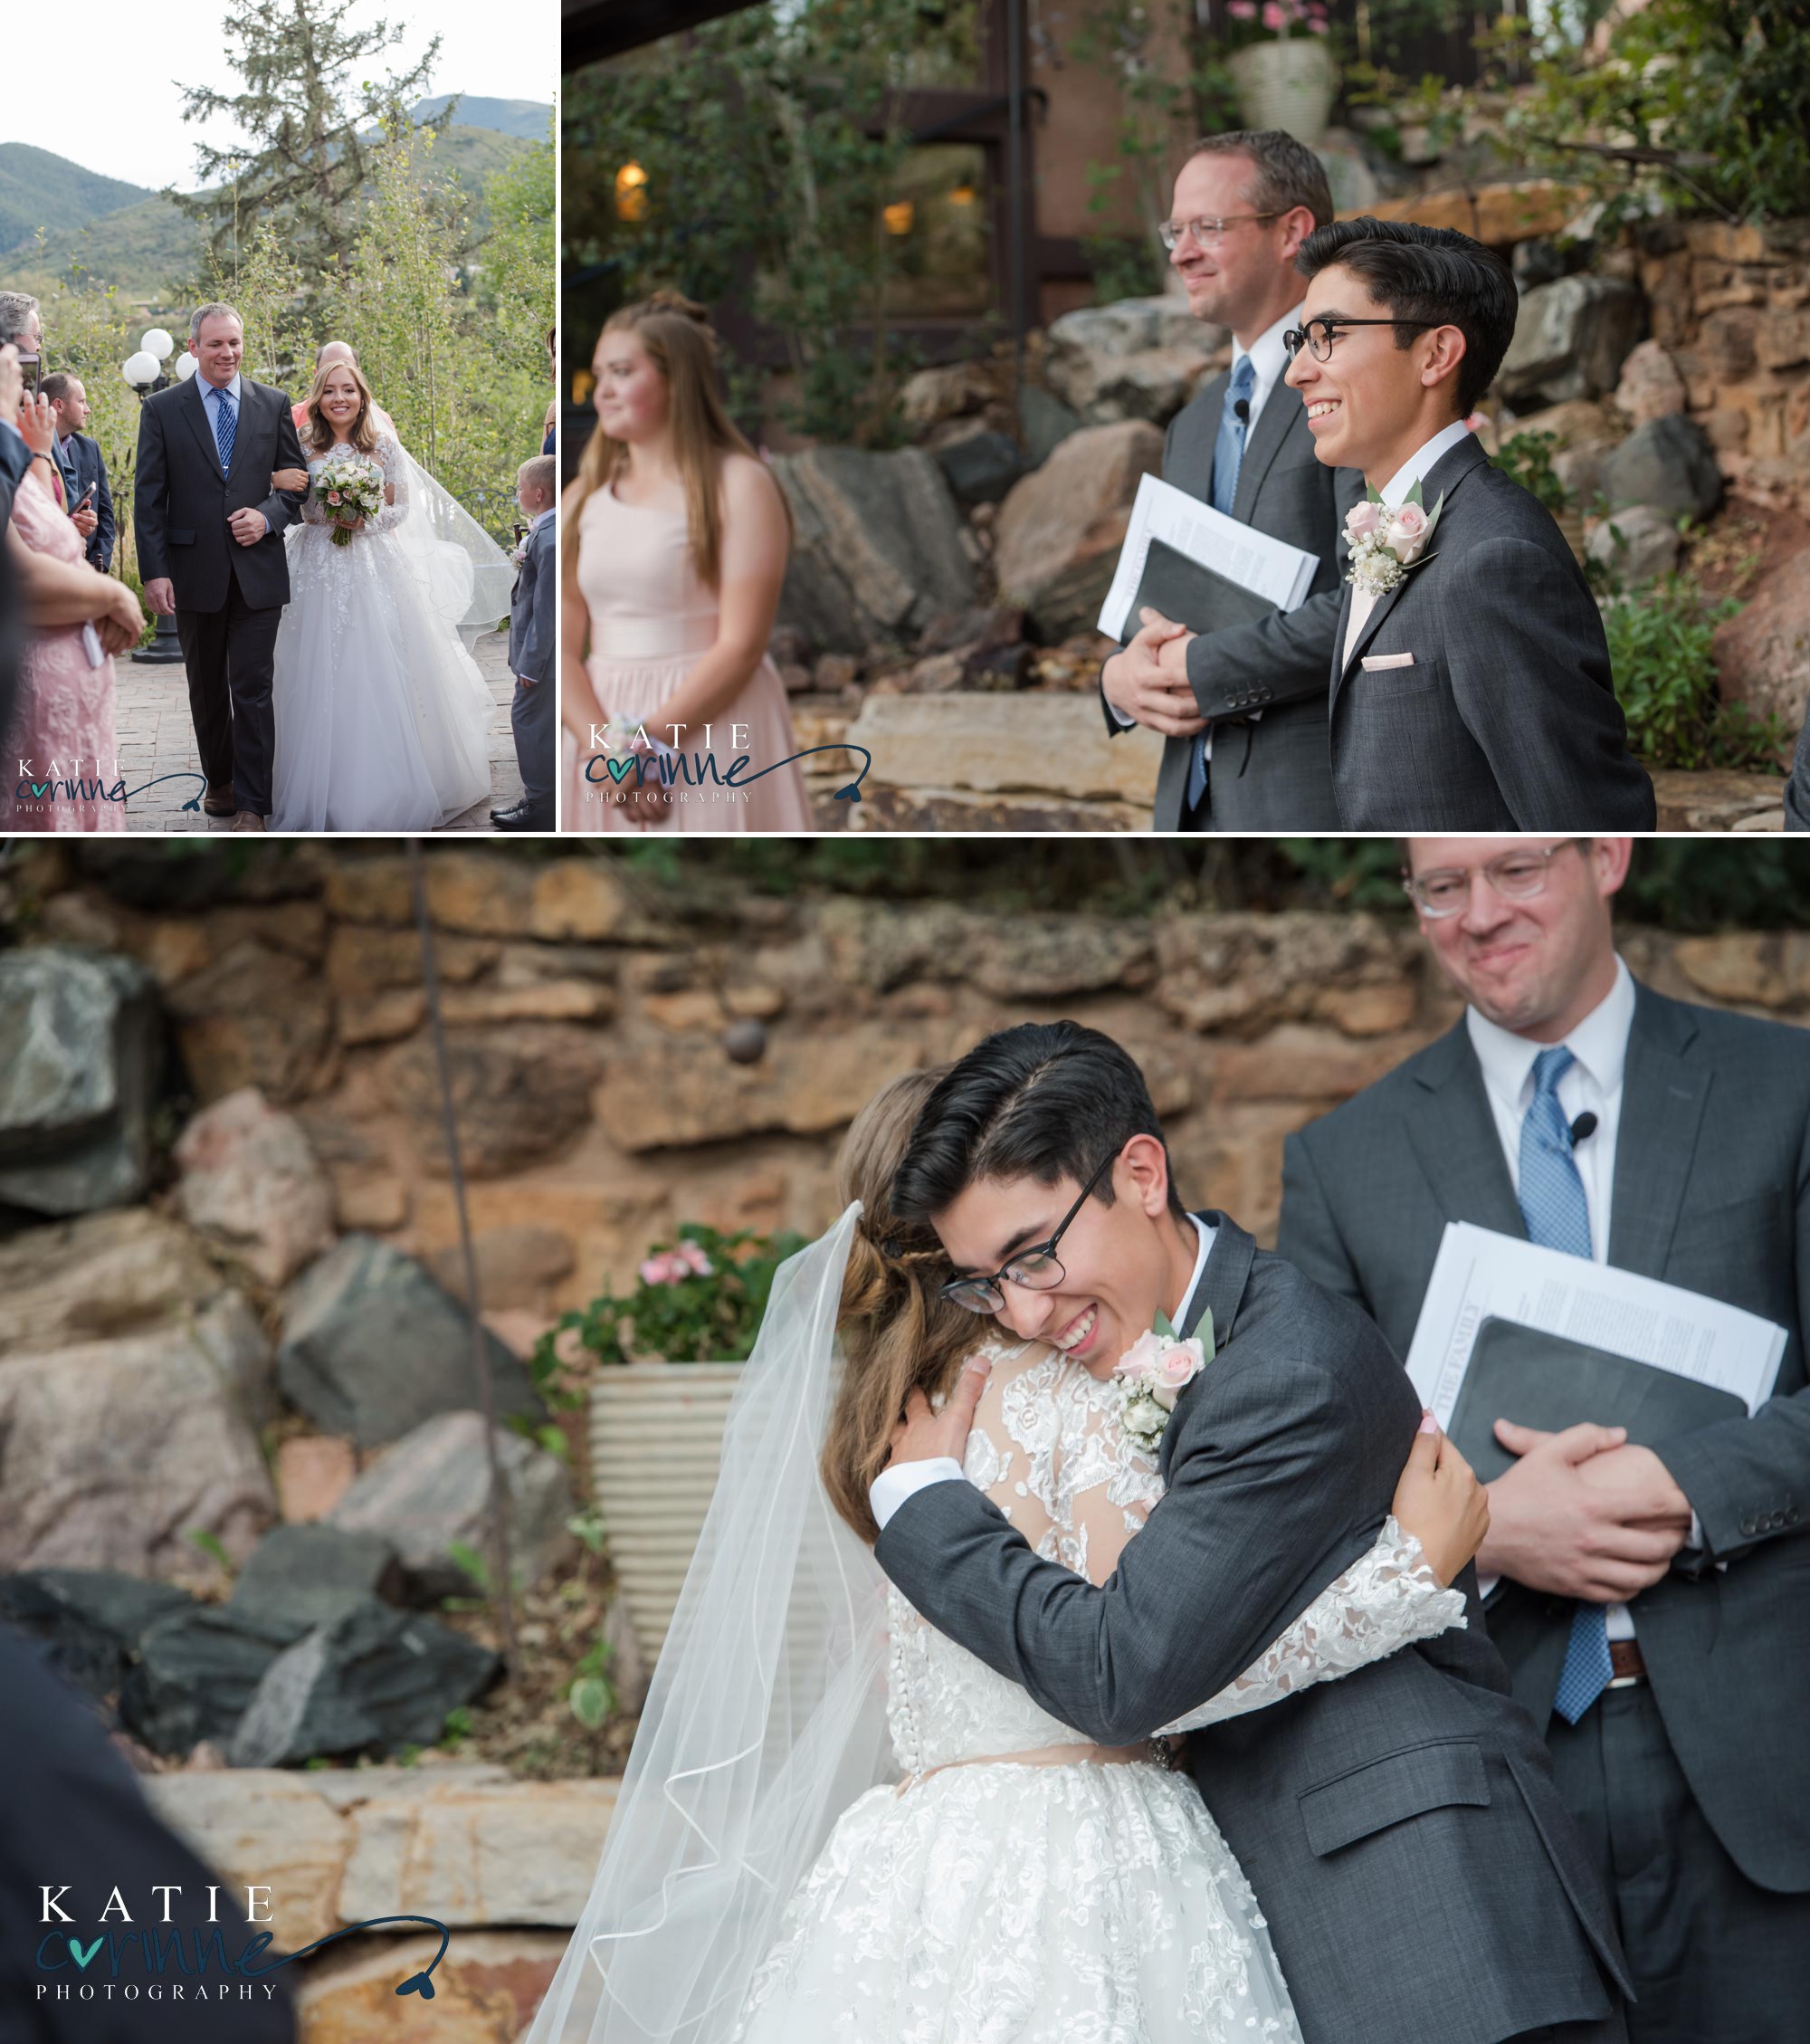 Colorado springs couple marries in outdoor summer wedding